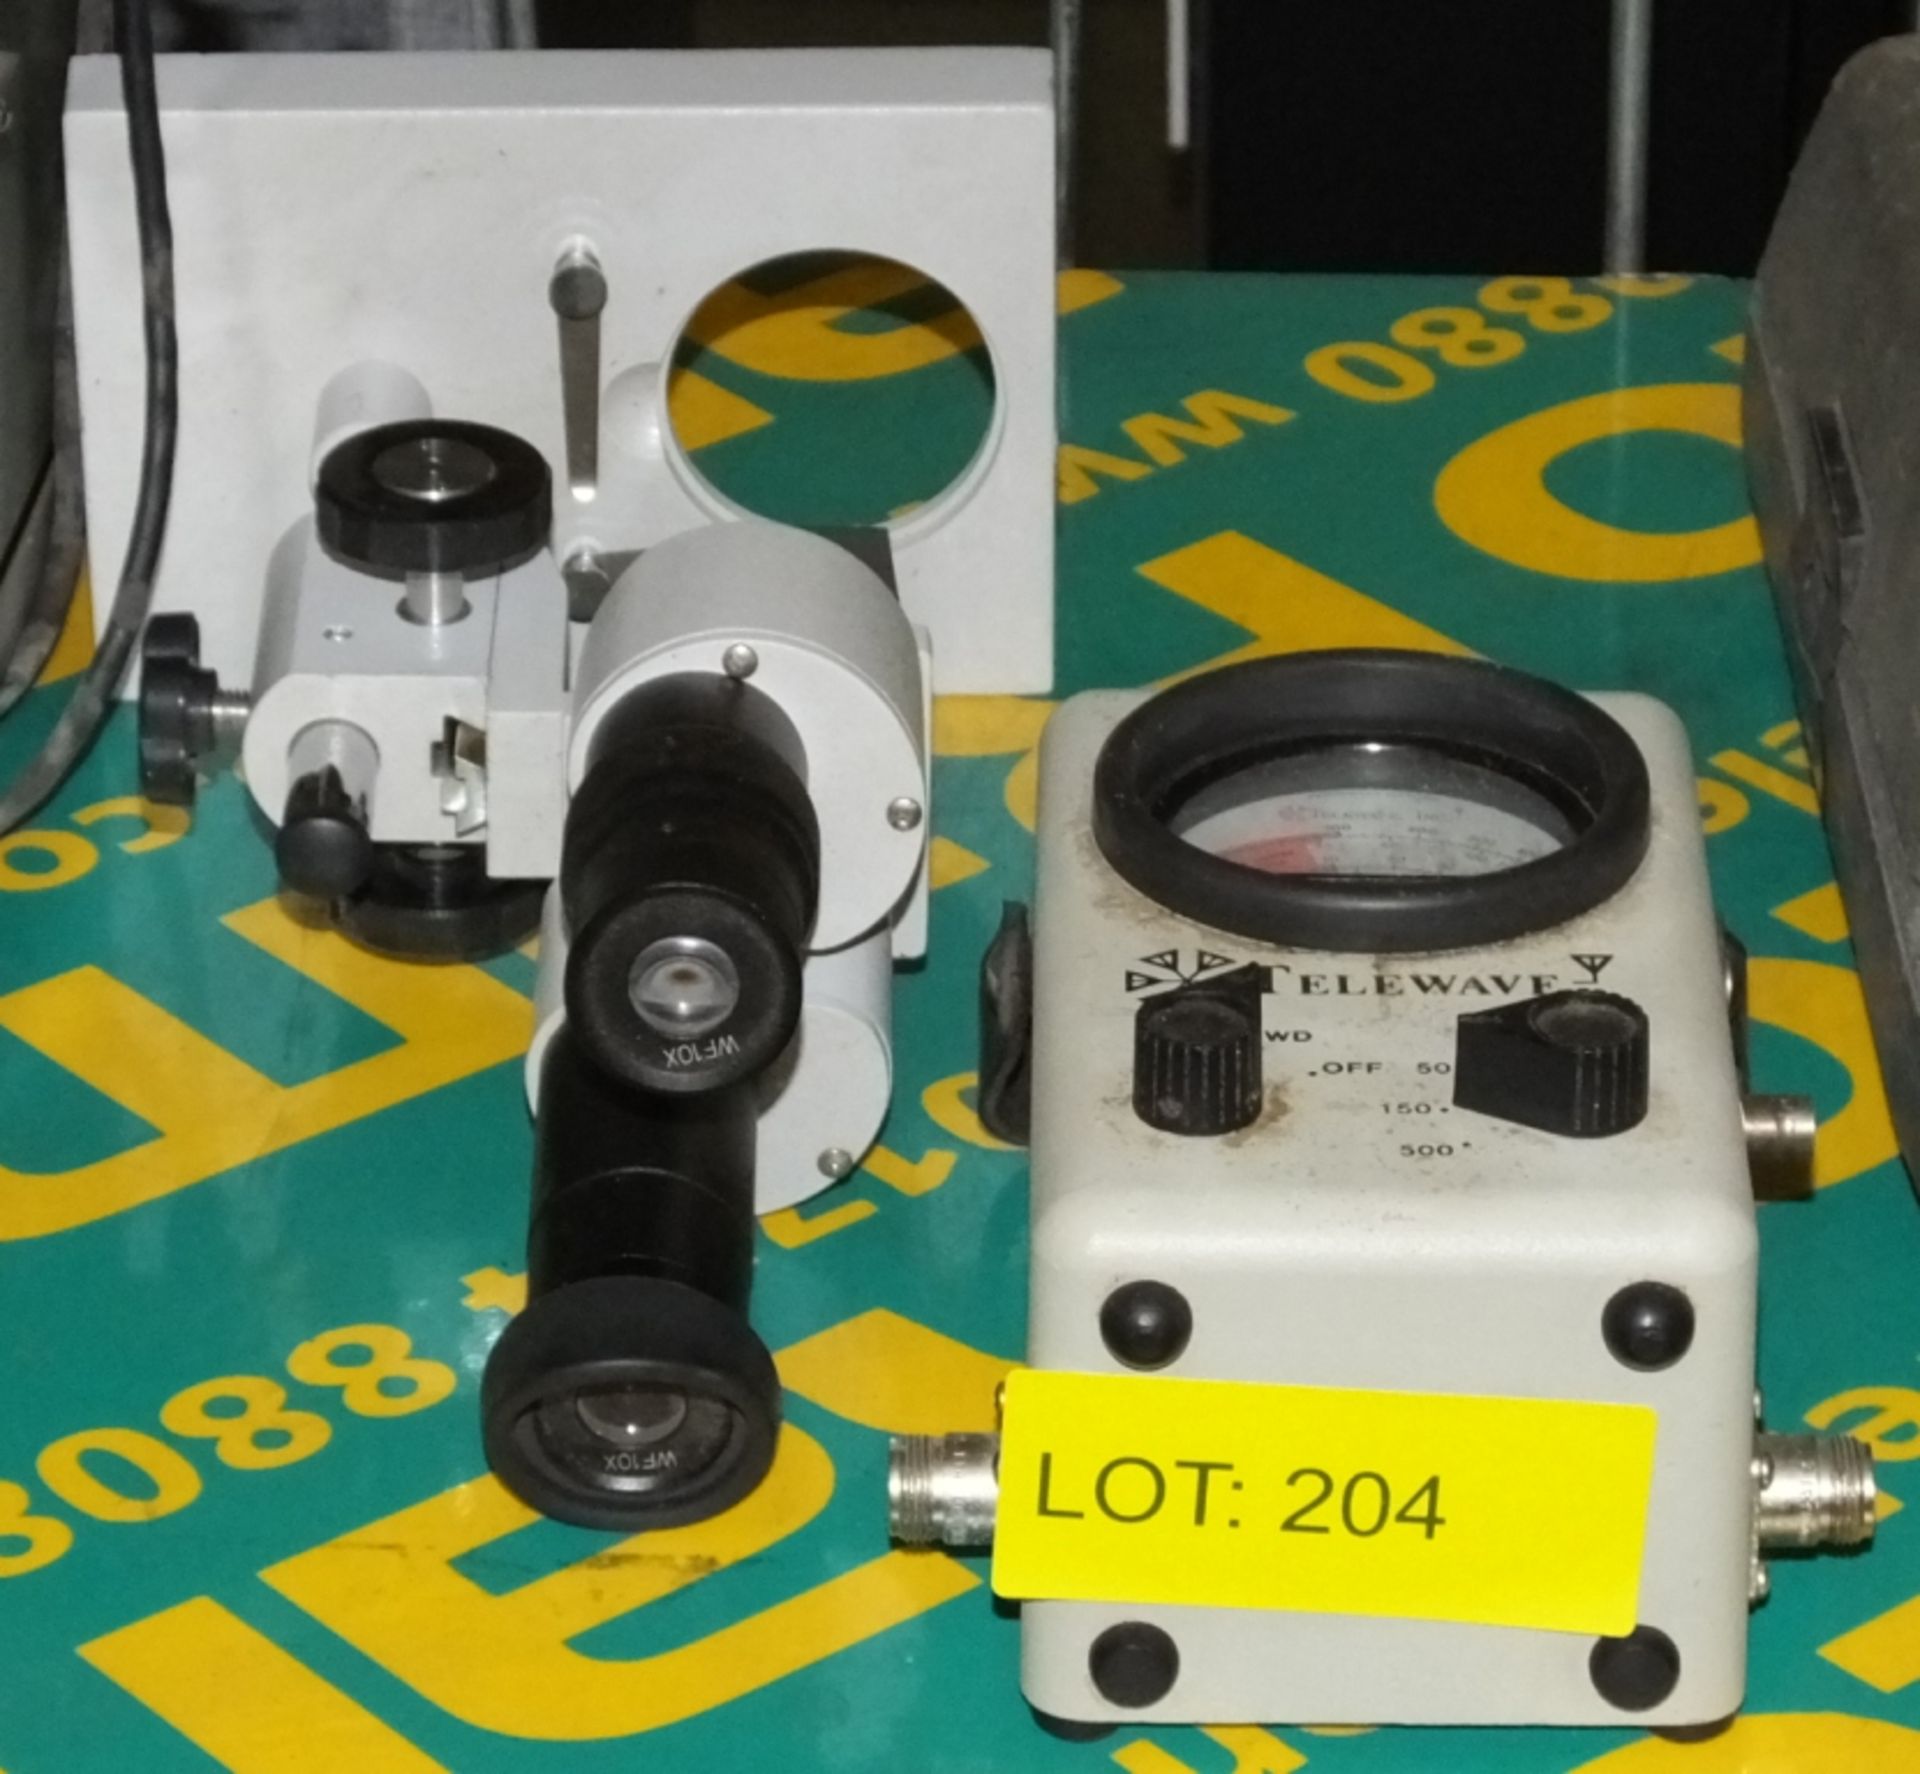 Stroboscope, Microscope, Telewave unit, Fluke multimeter, Sonnenschein Microprocessor - Image 2 of 3